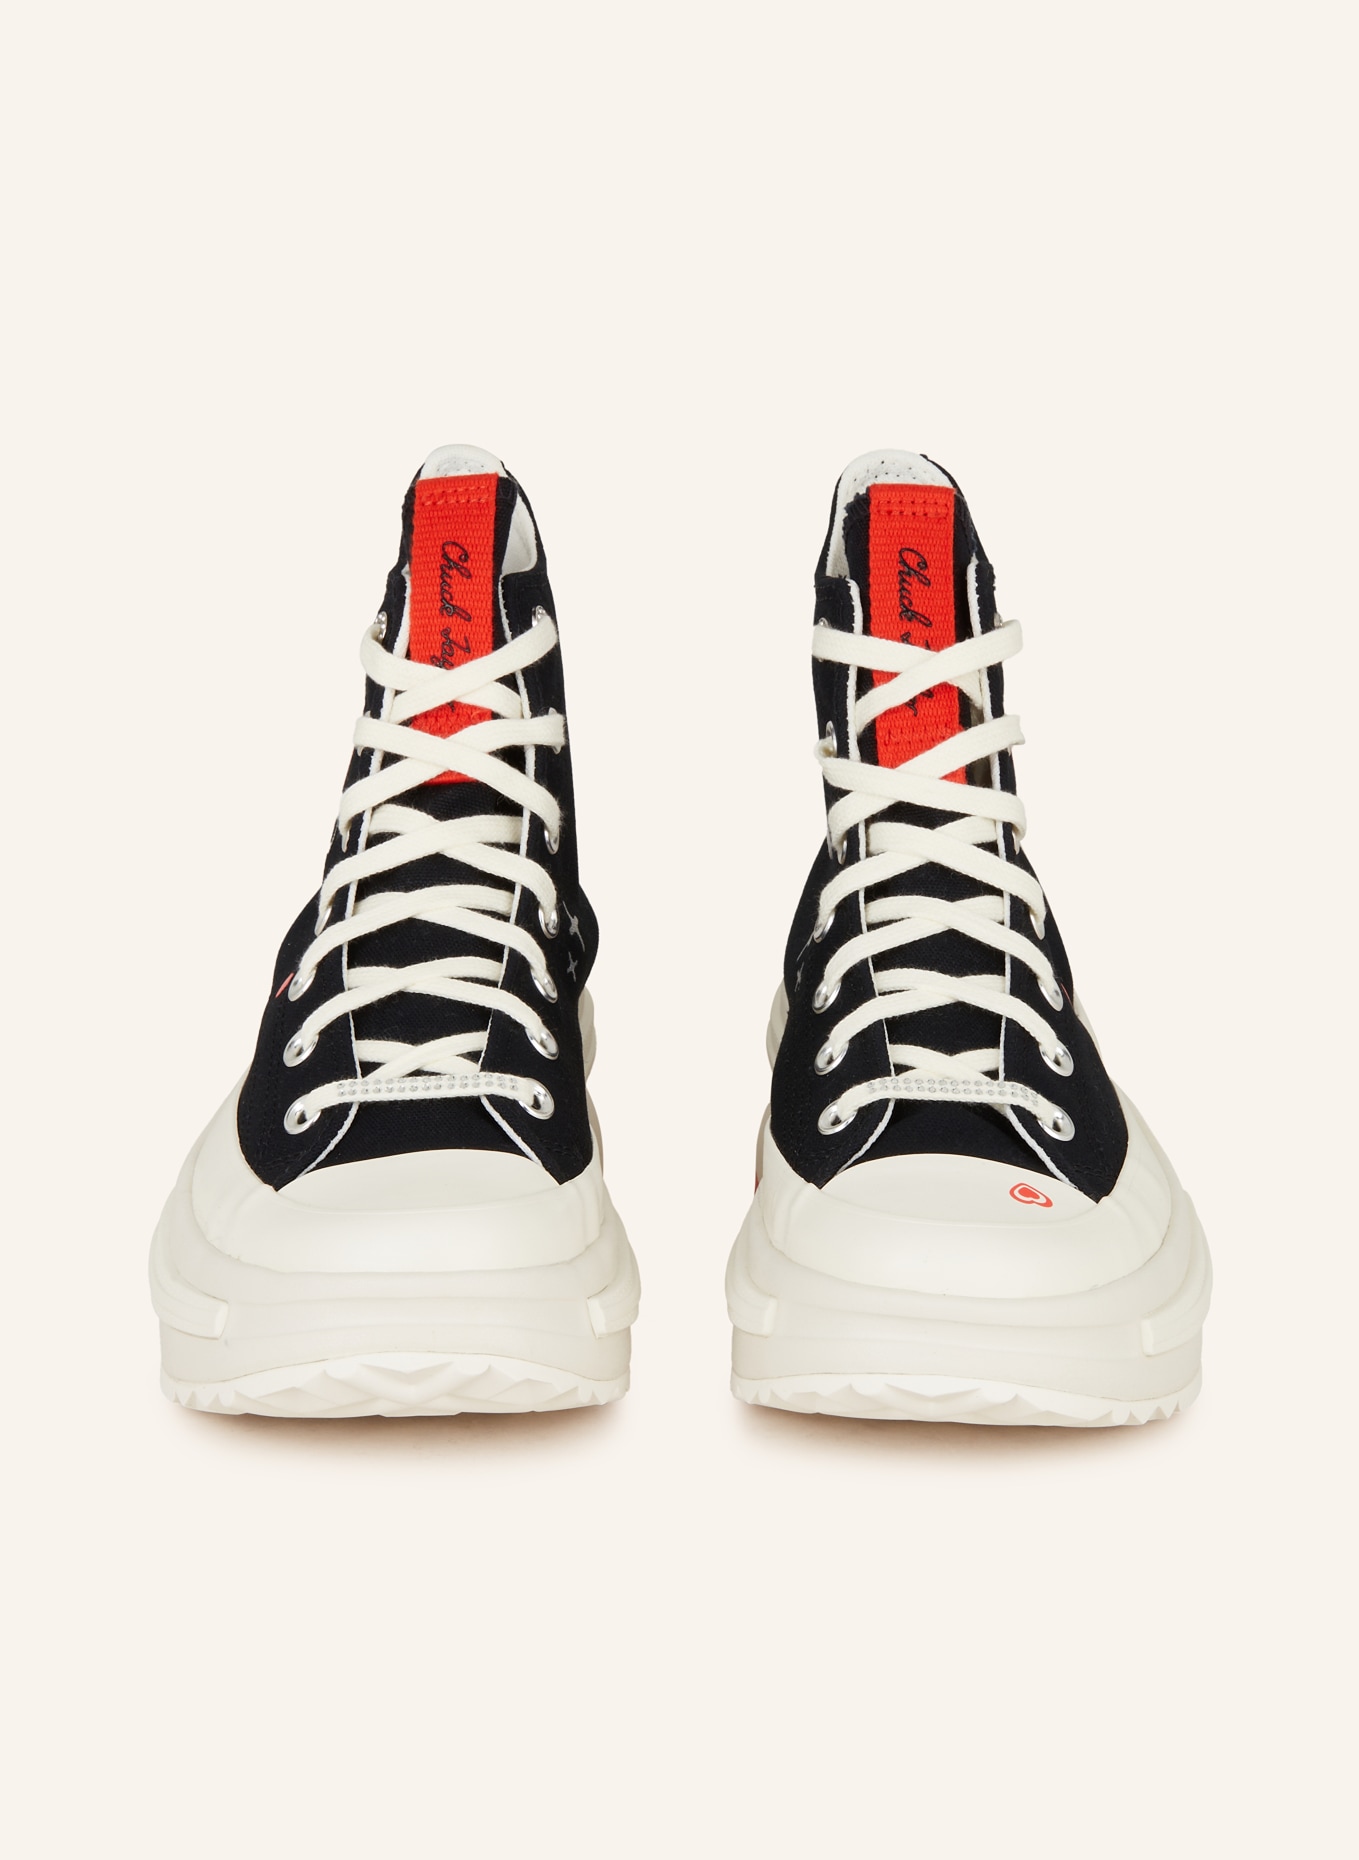 CONVERSE Hightop-Sneaker RUN STAR LEGACY, Farbe: SCHWARZ/ ECRU/ ROT (Bild 3)